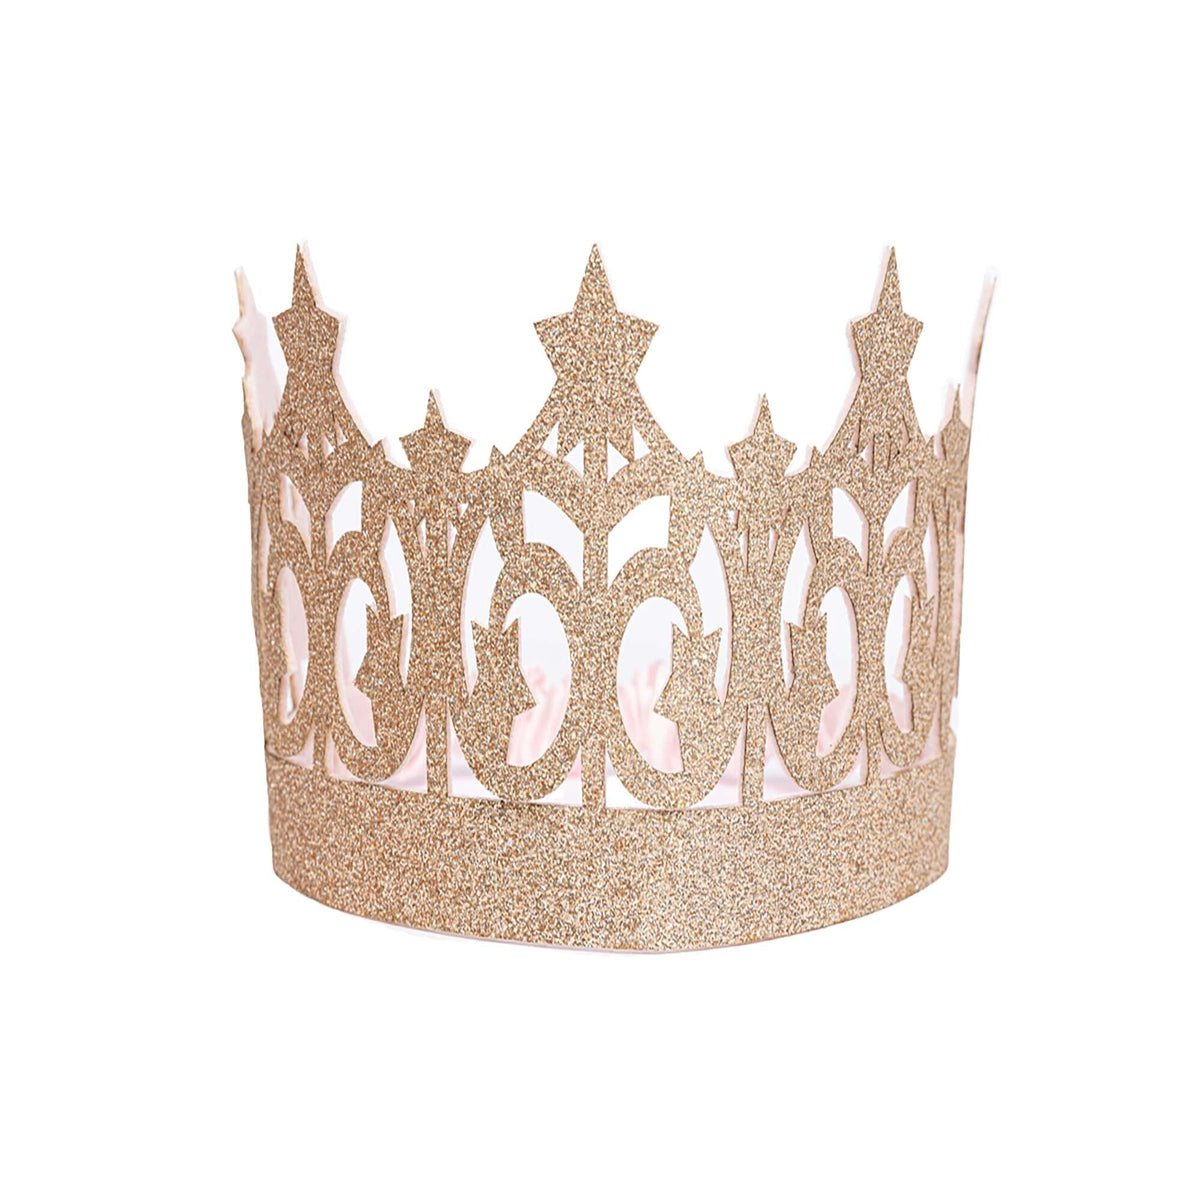 Great Pretenders Costume Accessories Gold Glitter Crown, 1 Count